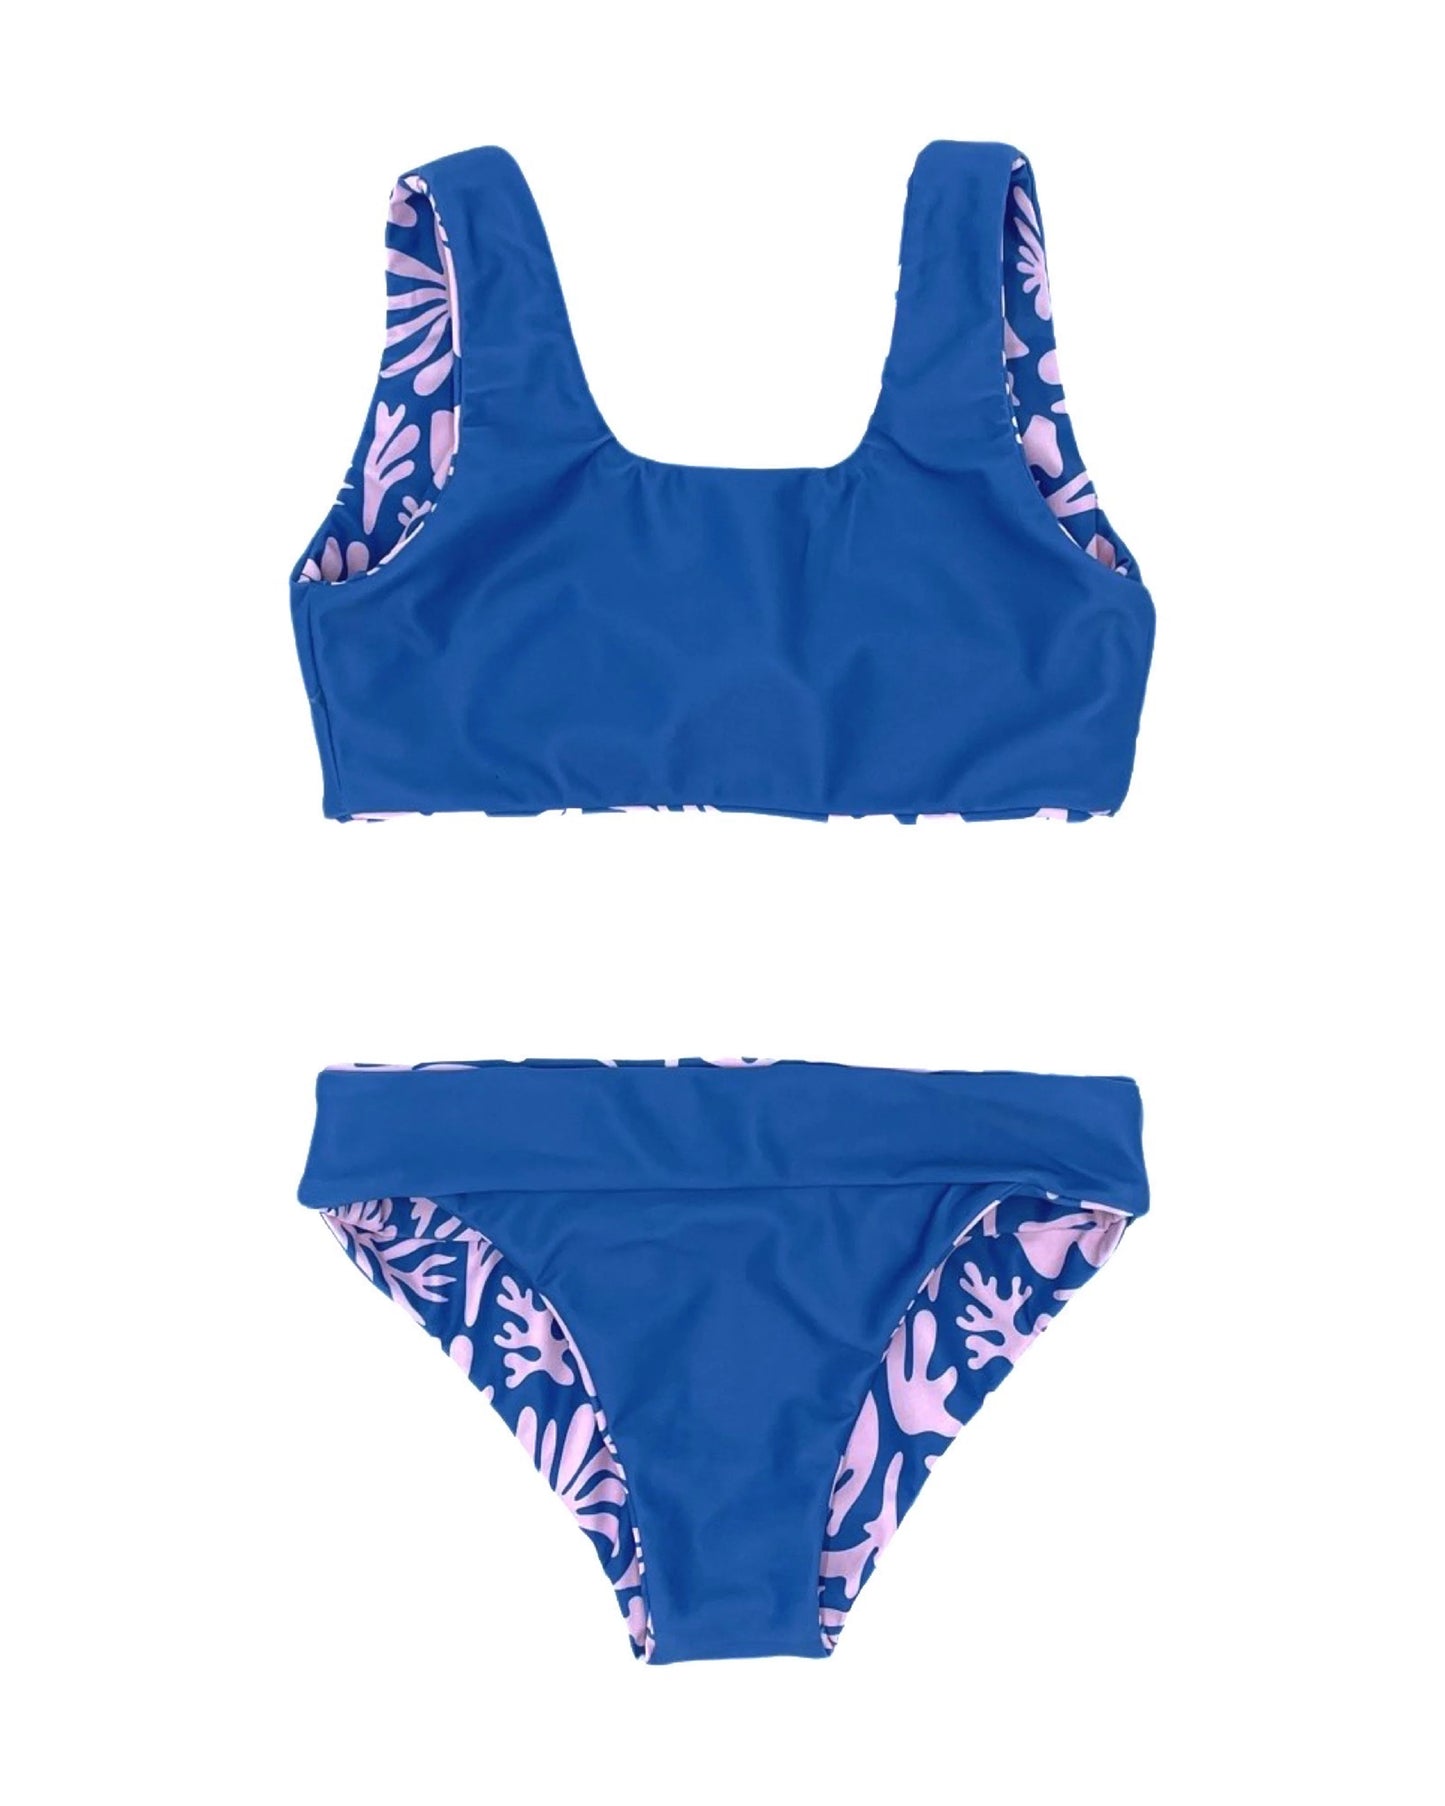 Island Hopper Reversible Bikini in Fairy Tale Pink  - Doodlebug's Children's Boutique